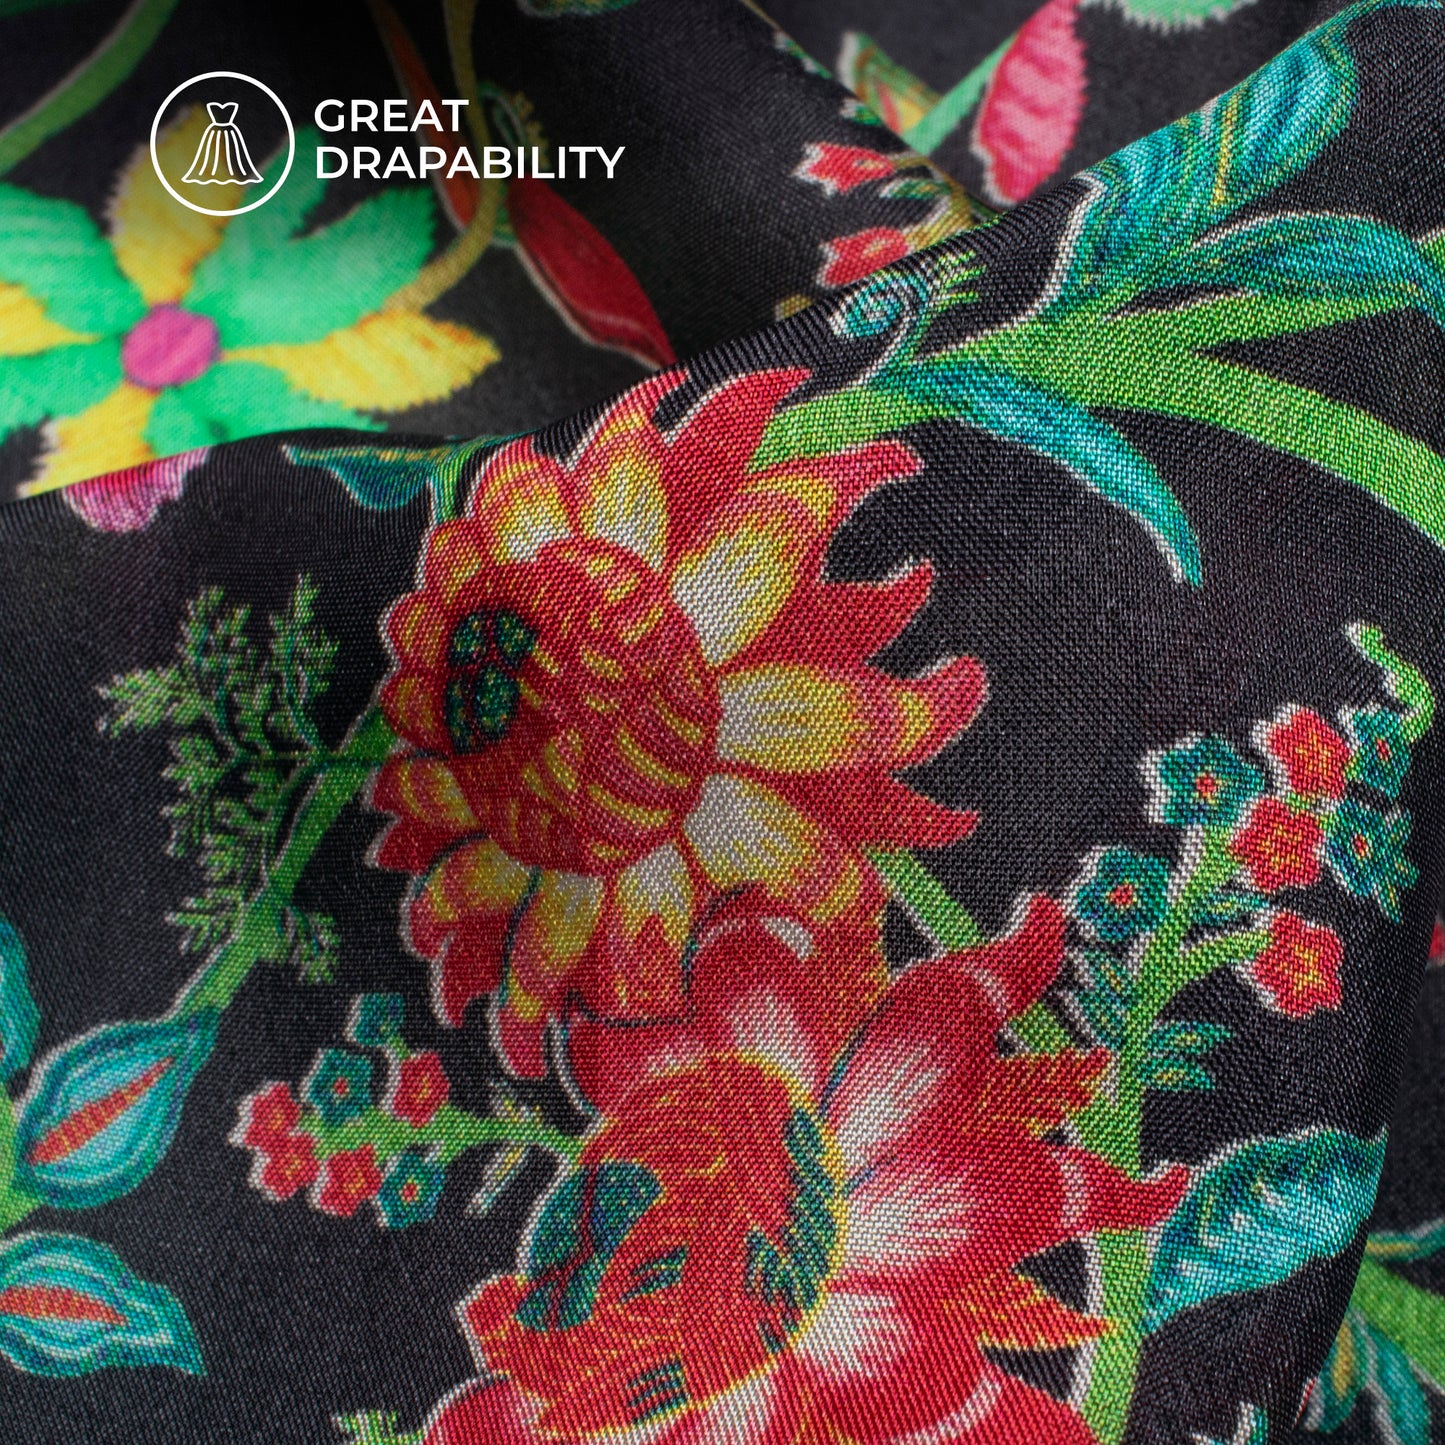 Crow Black Floral Digital Print Viscose Uppada Silk Fabric